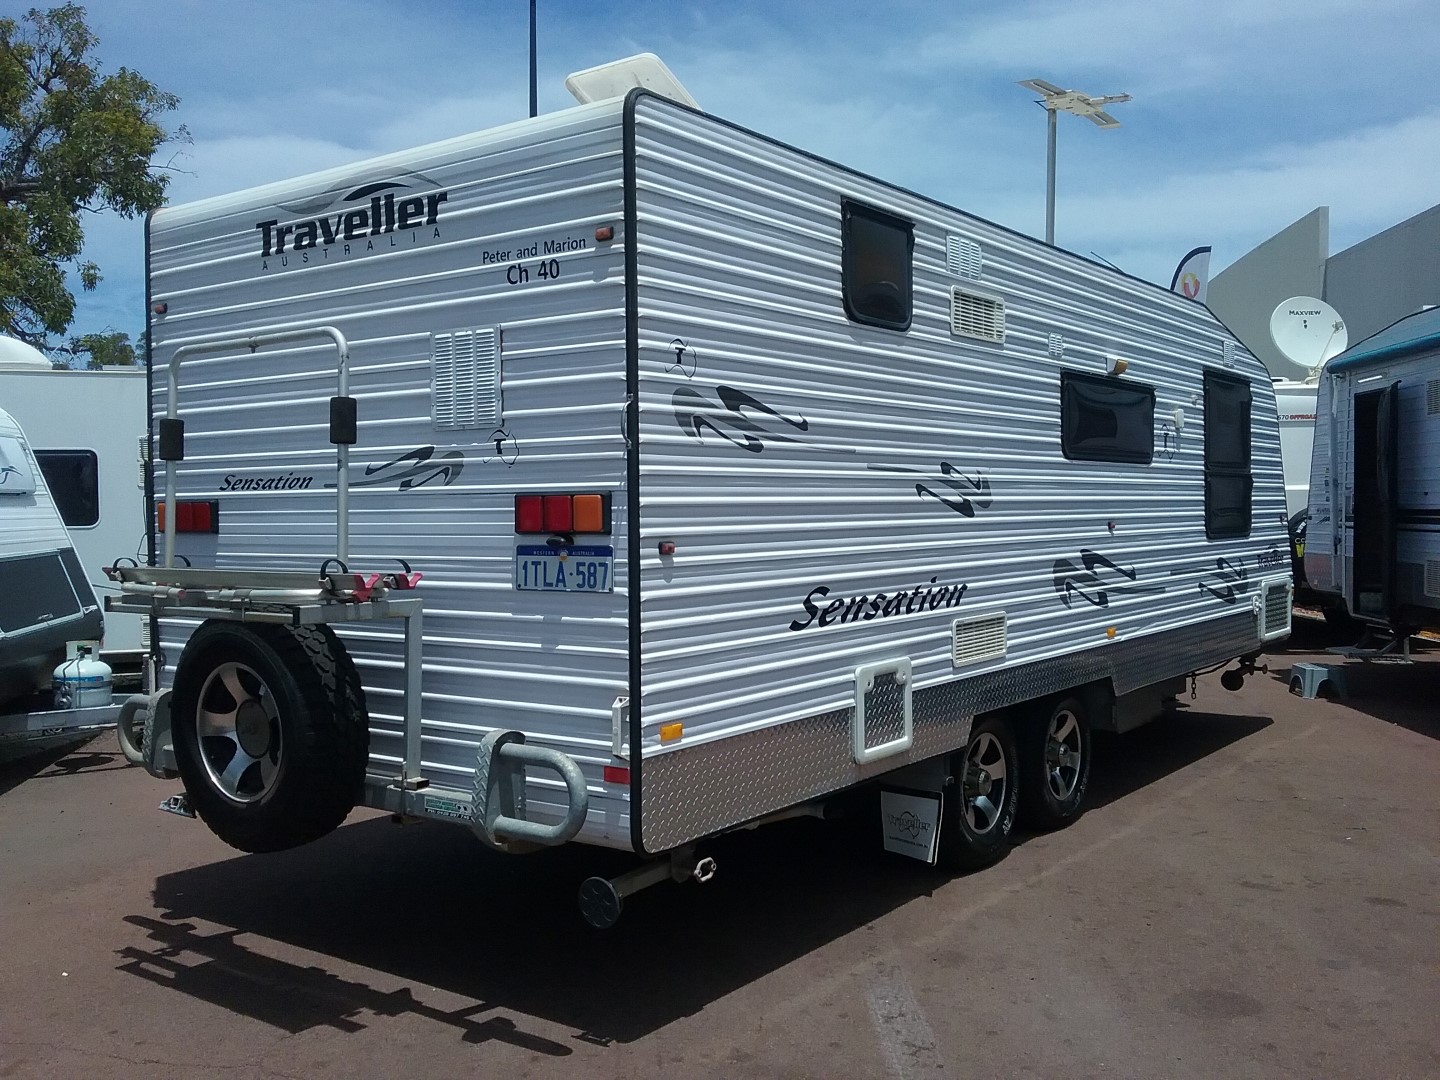 traveller sensation caravan for sale